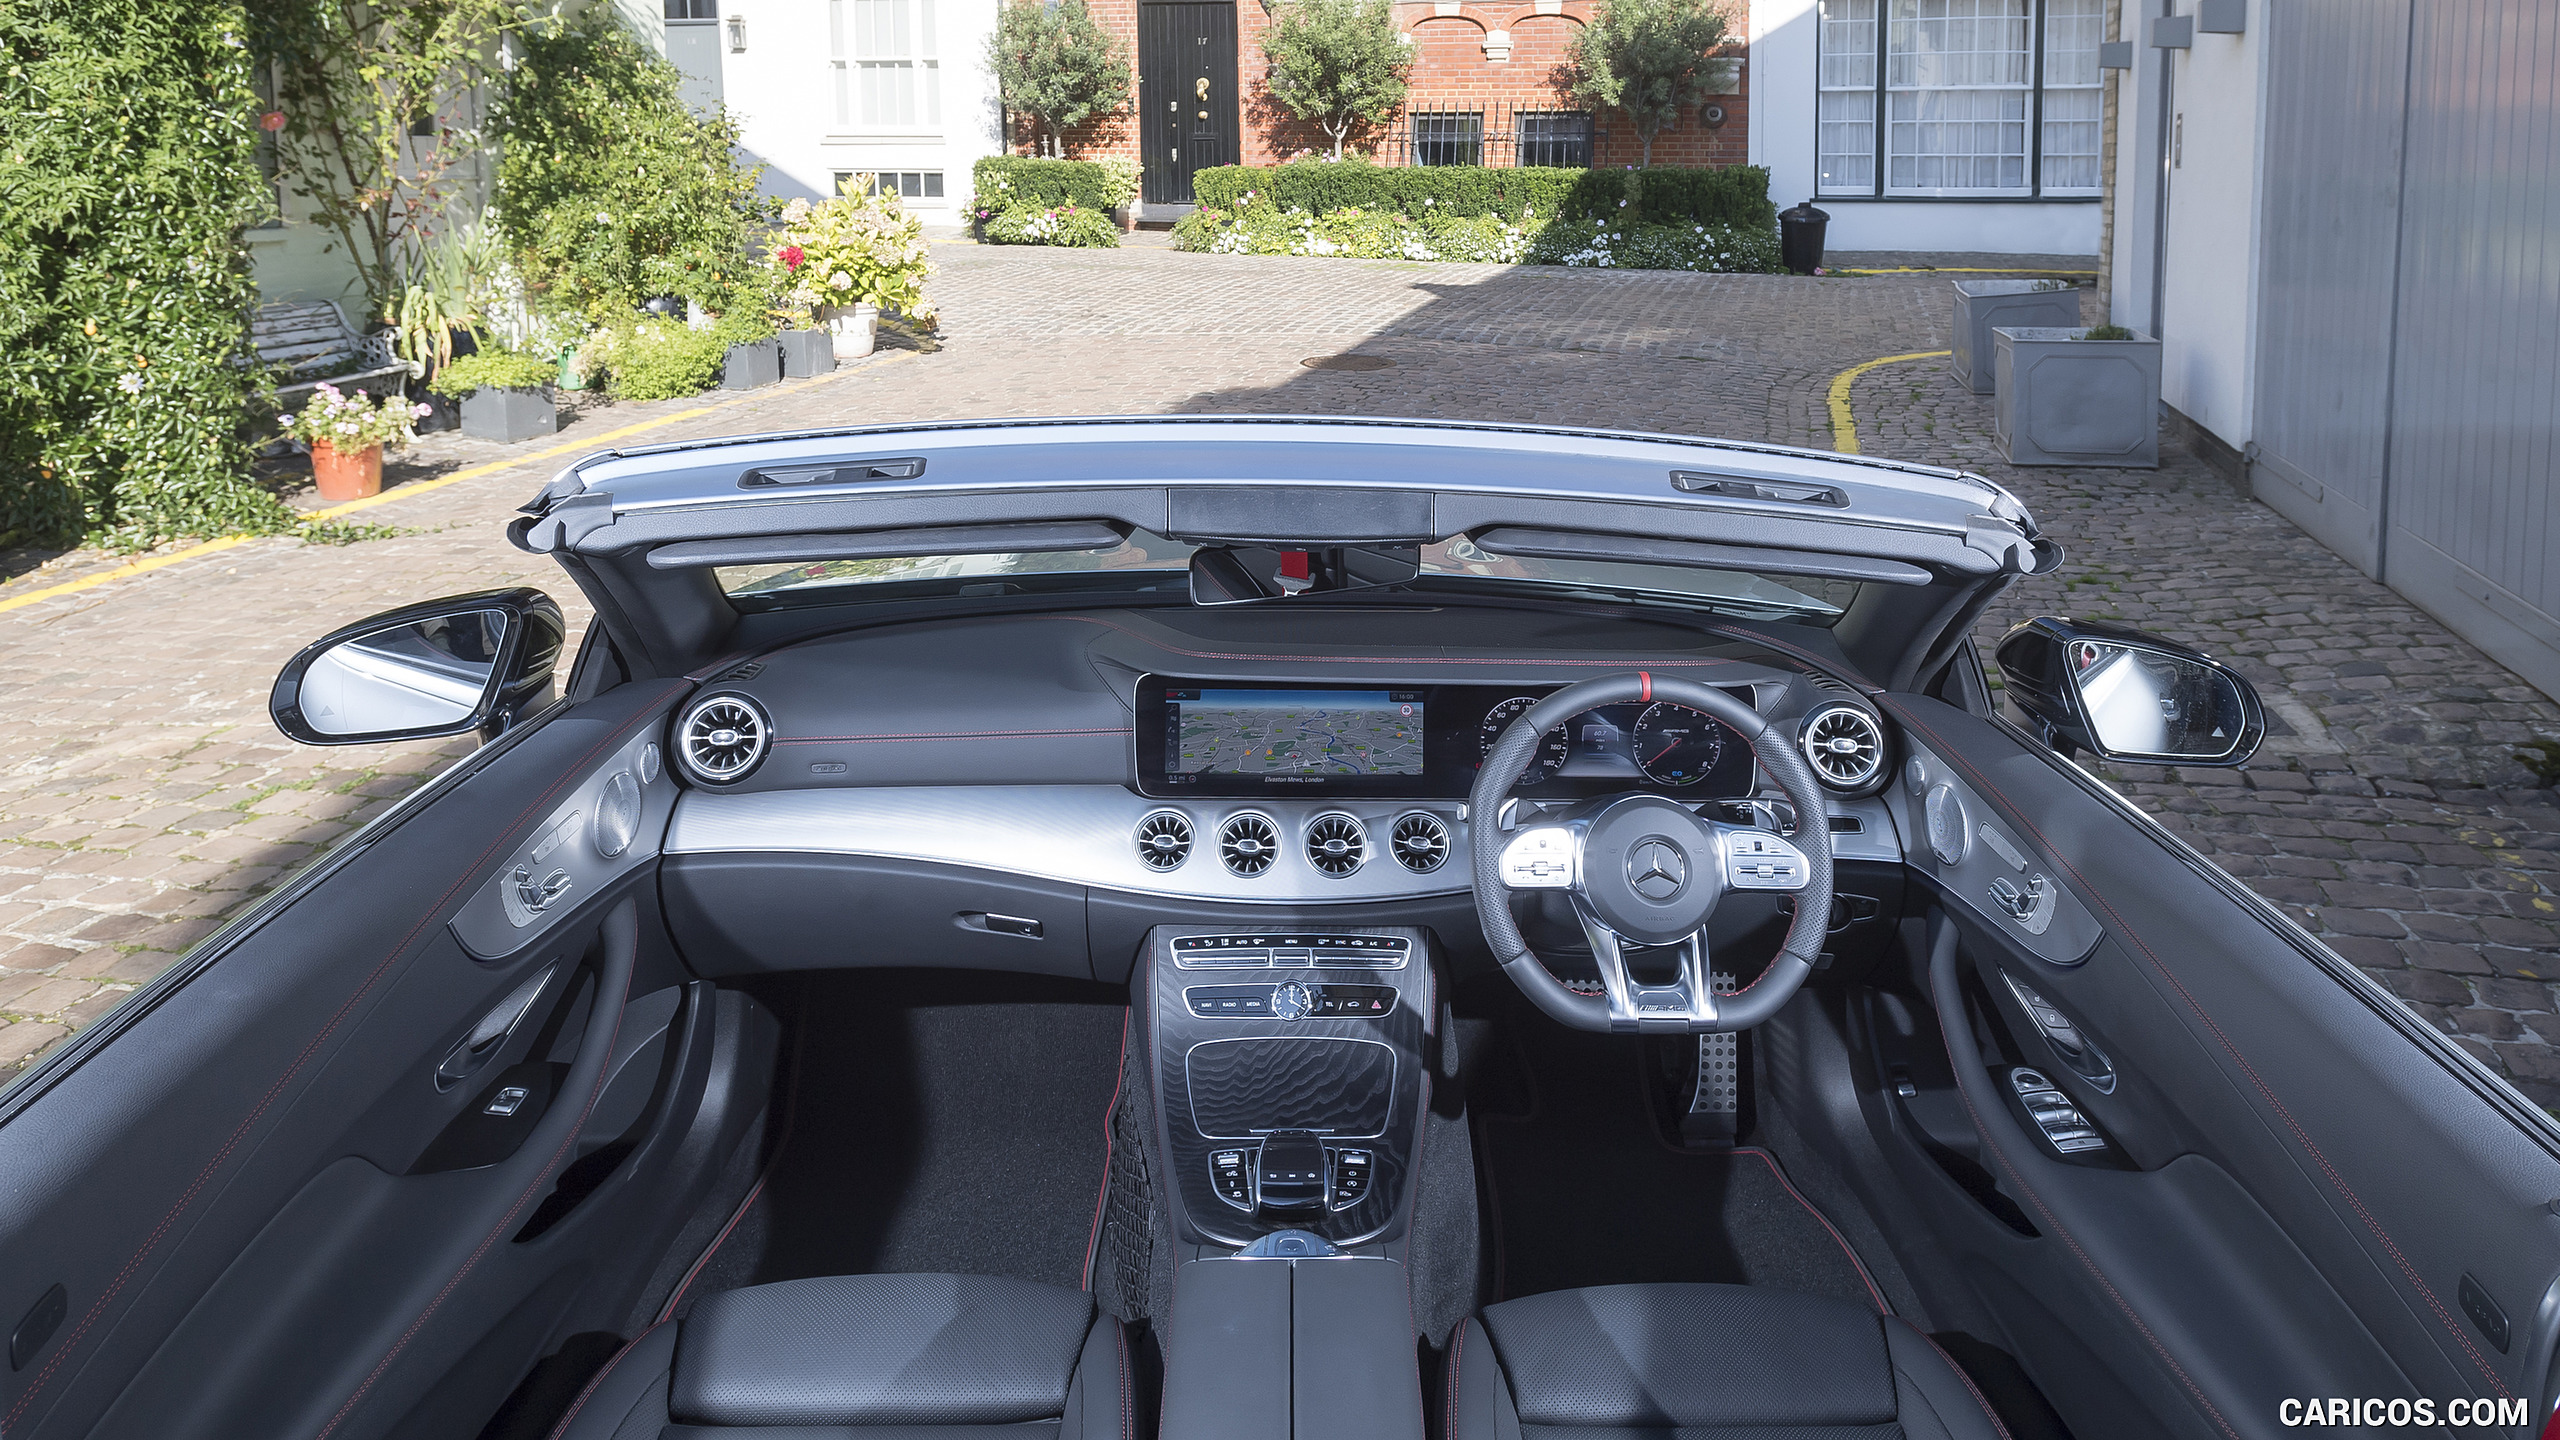 2019 Mercedes-AMG E 53 Cabrio (UK-Spec) - Interior, Cockpit, #164 of 166